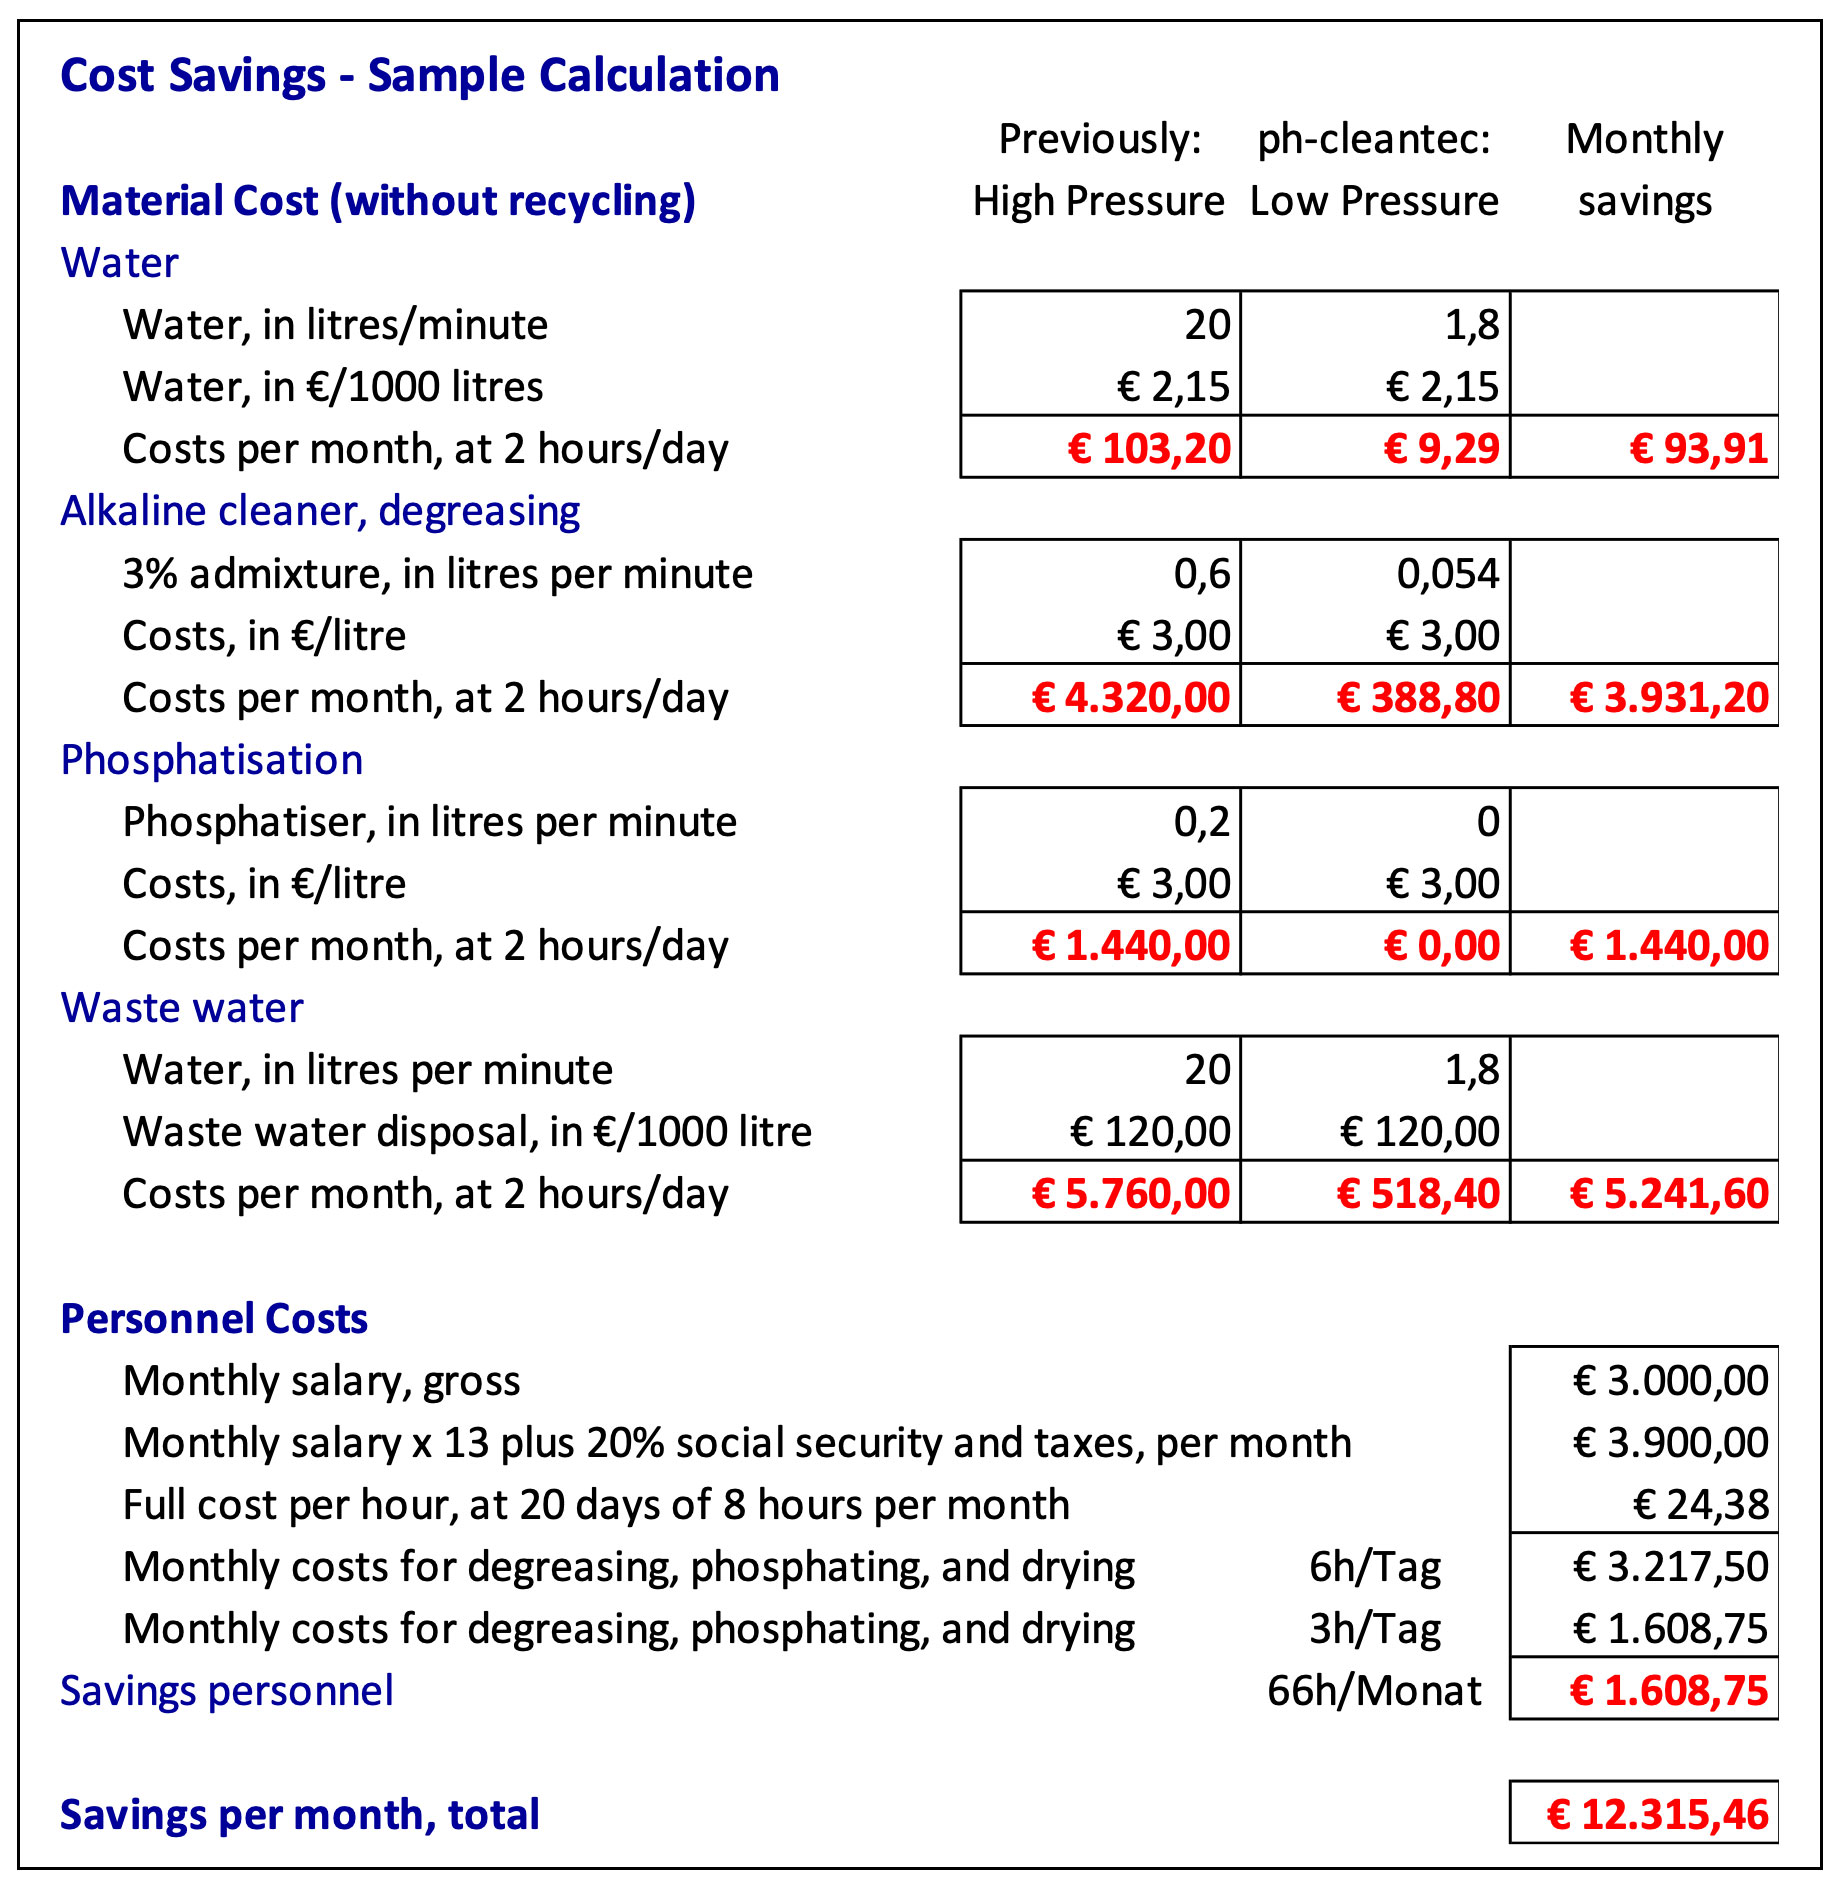 Cost savings - sample calculation